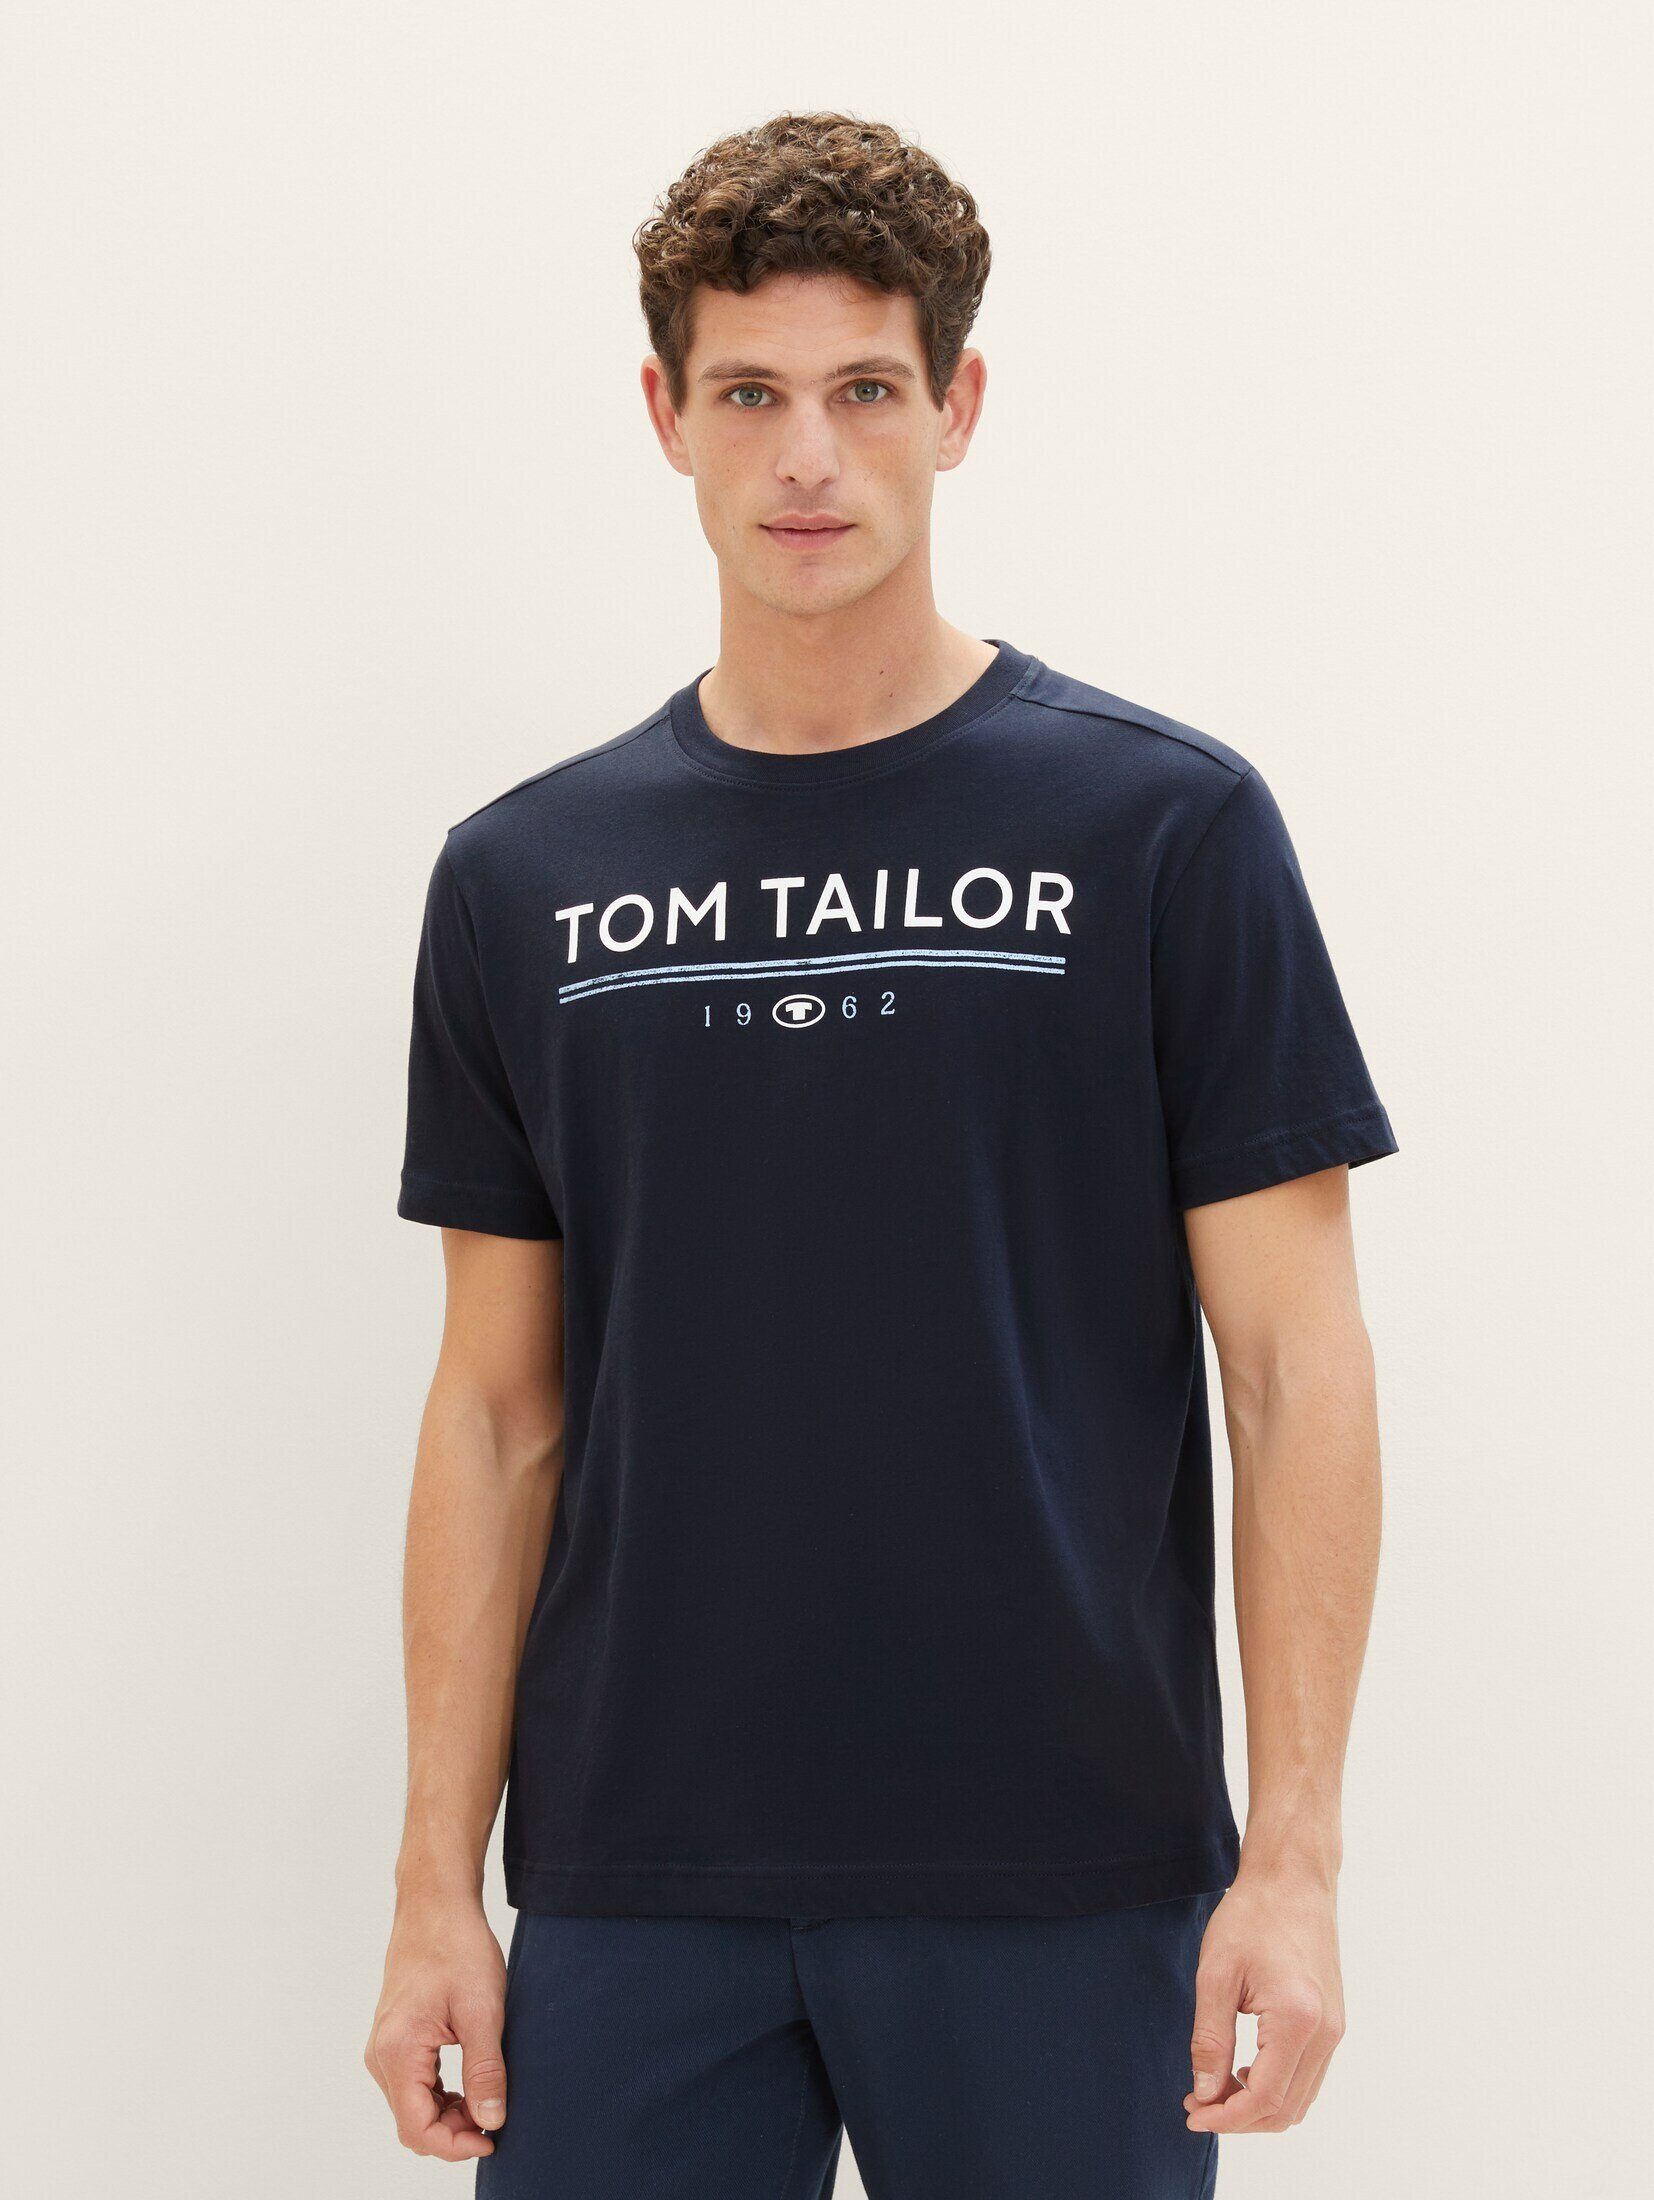 mit T-Shirt TAILOR sky T-Shirt Logo blue Print captain TOM